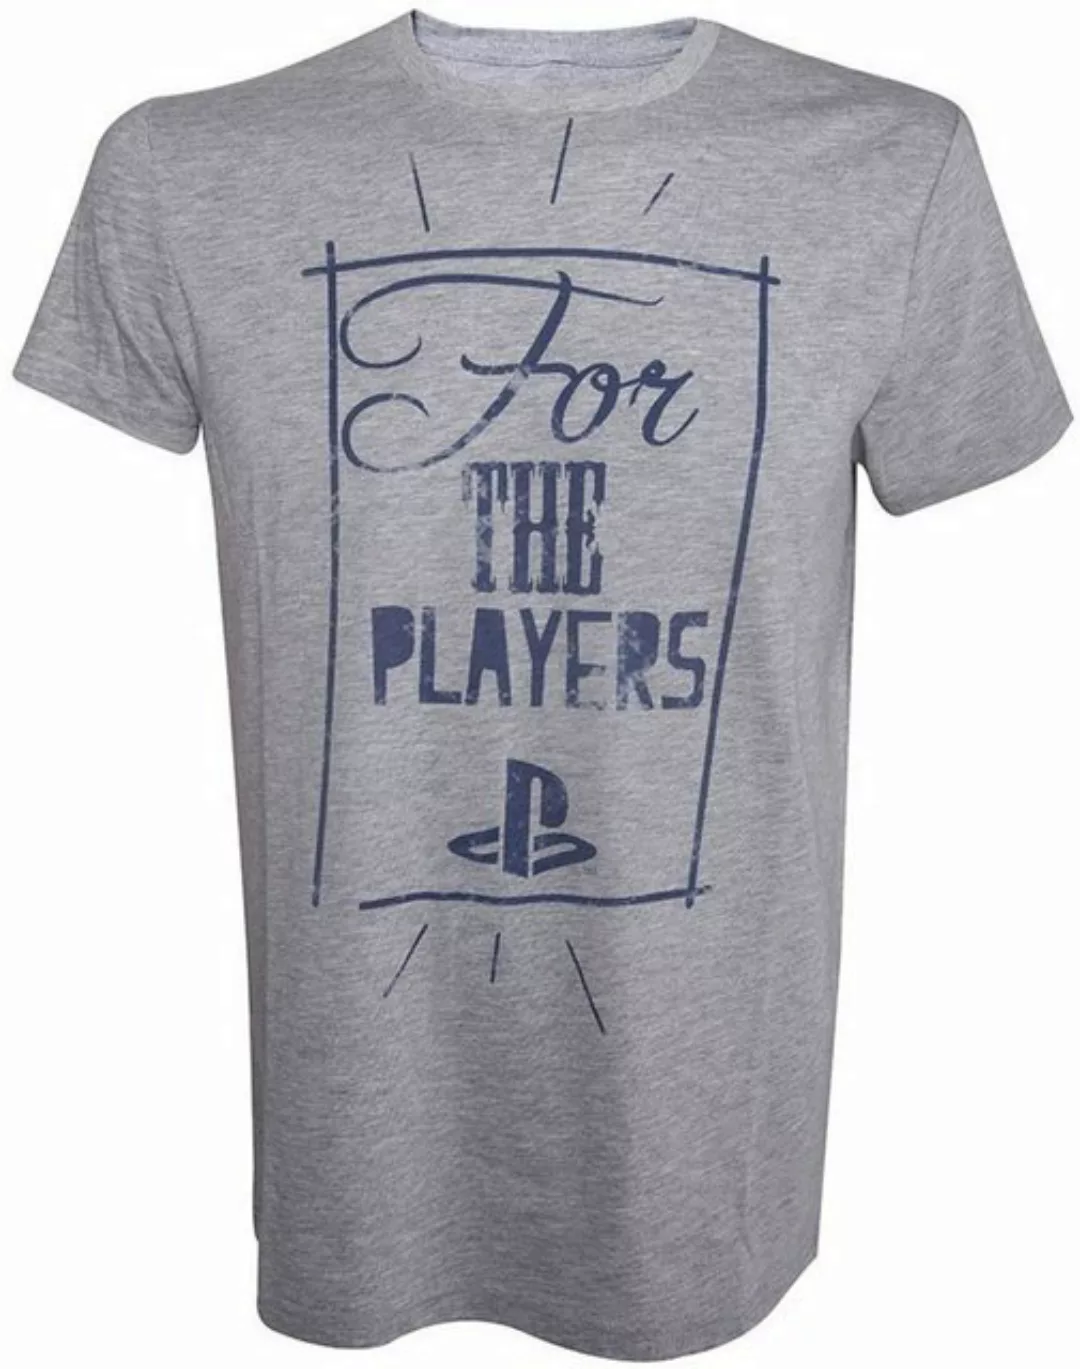 Playstation Print-Shirt FOR THE PLAYERS Playstation T-Shirt grau meliert S günstig online kaufen